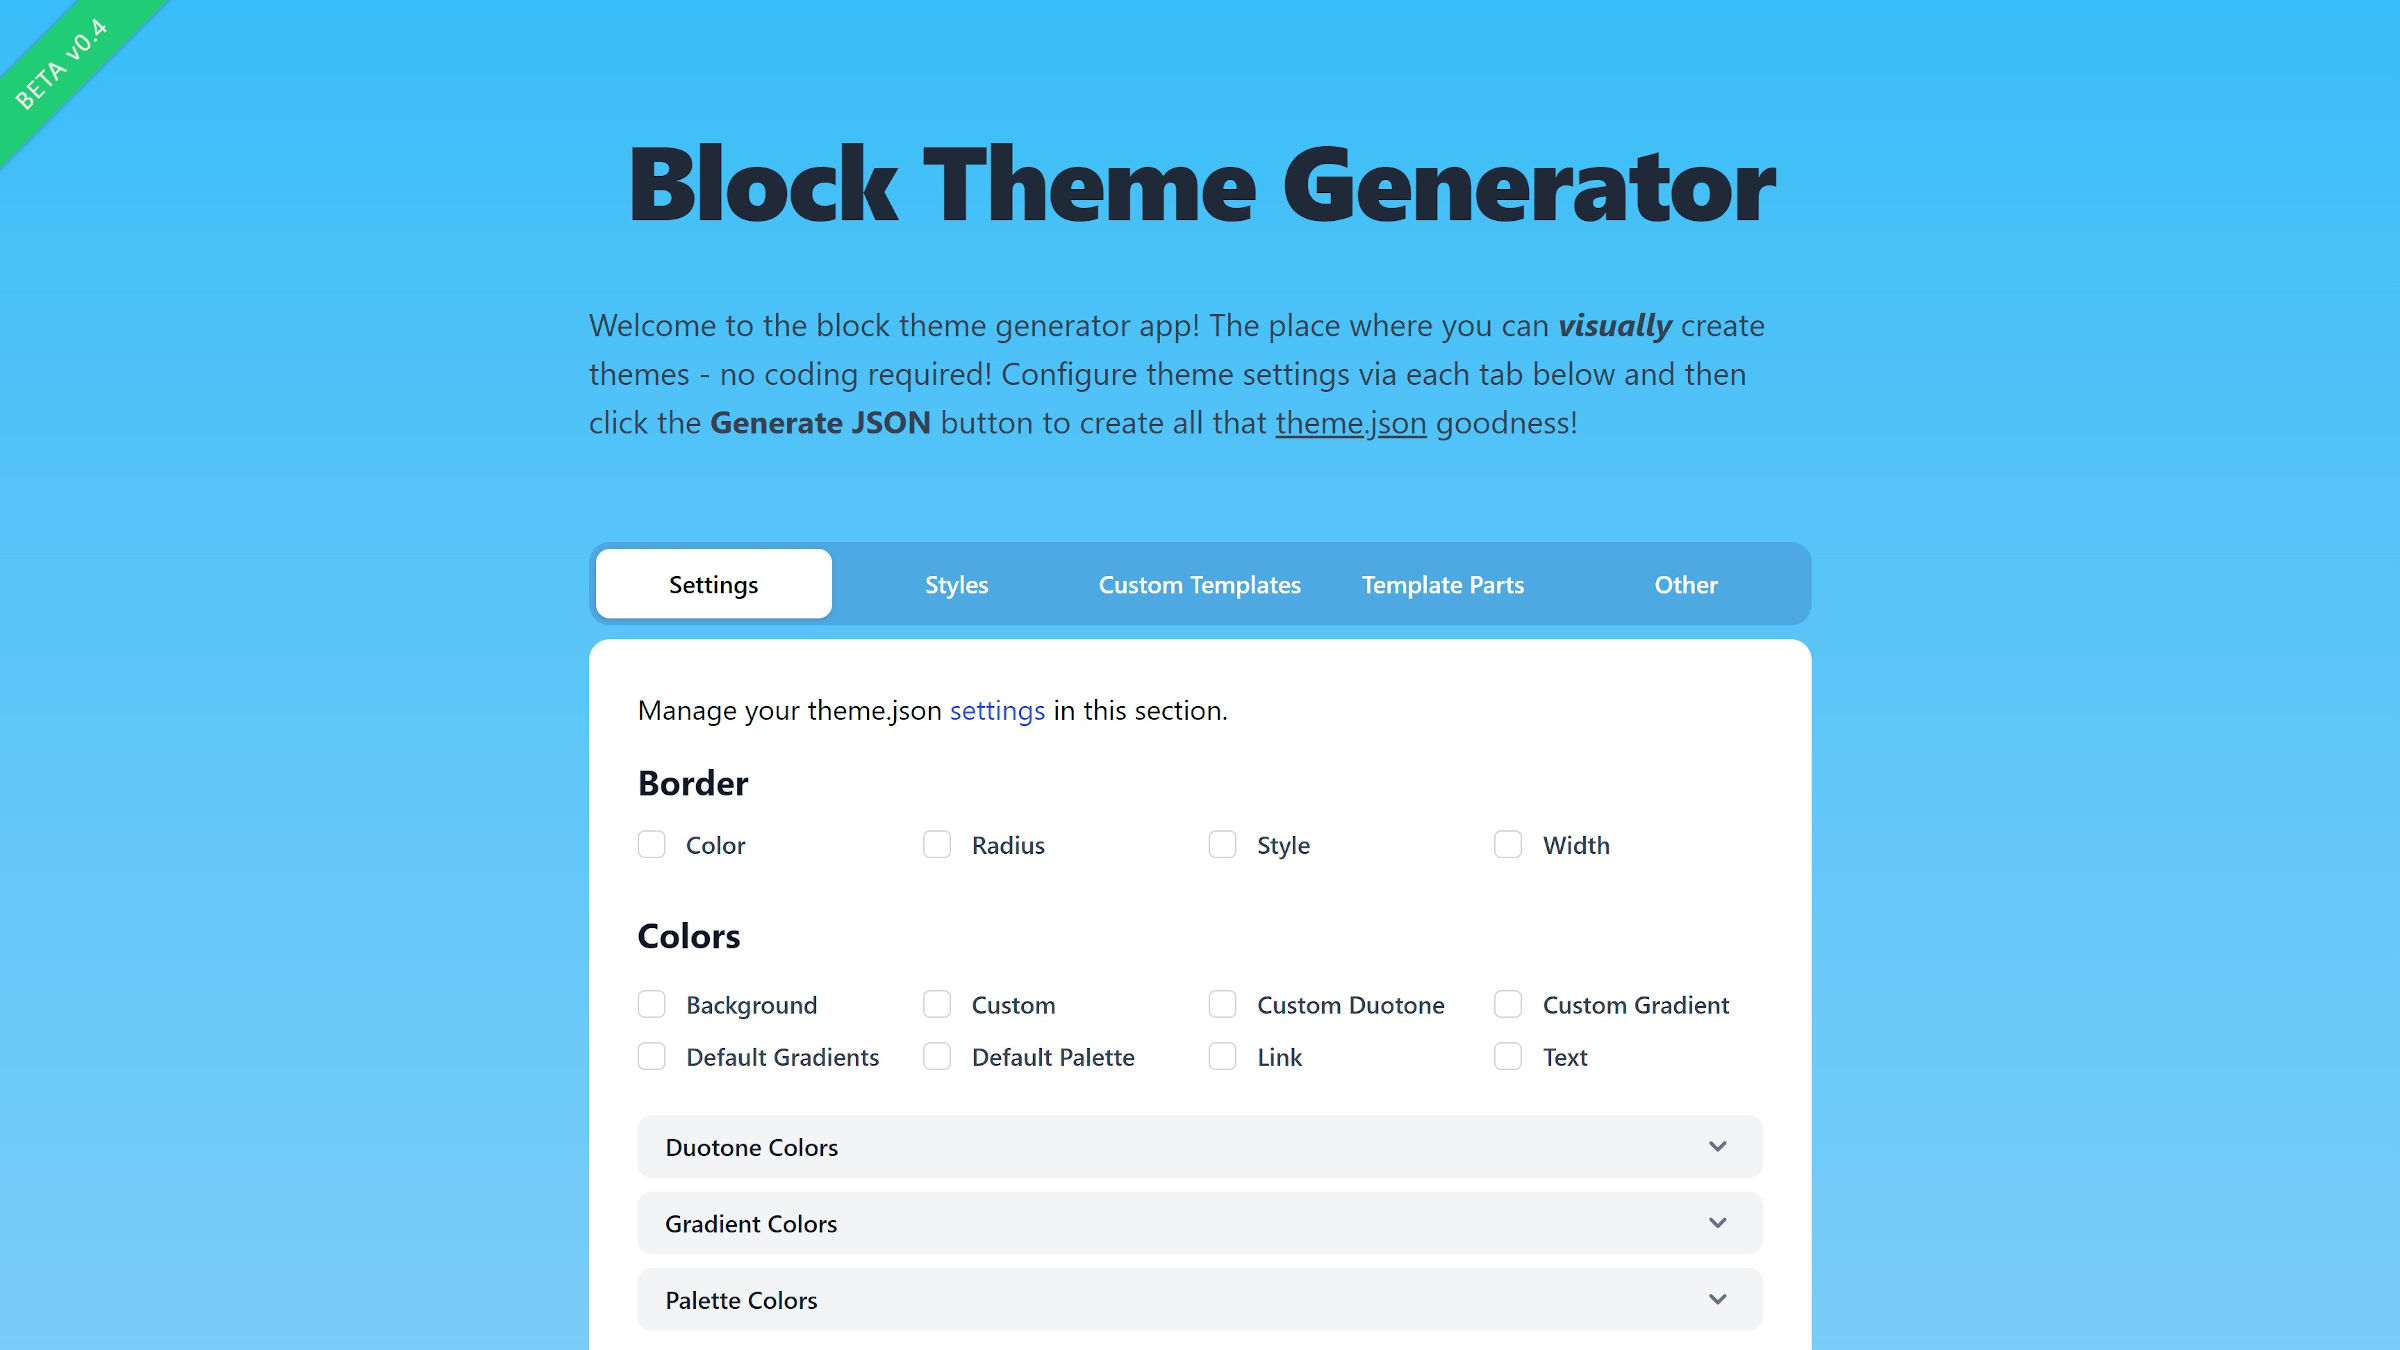 David Gwyer Teases Block Theme Generator App, Plans for a Community of Creators